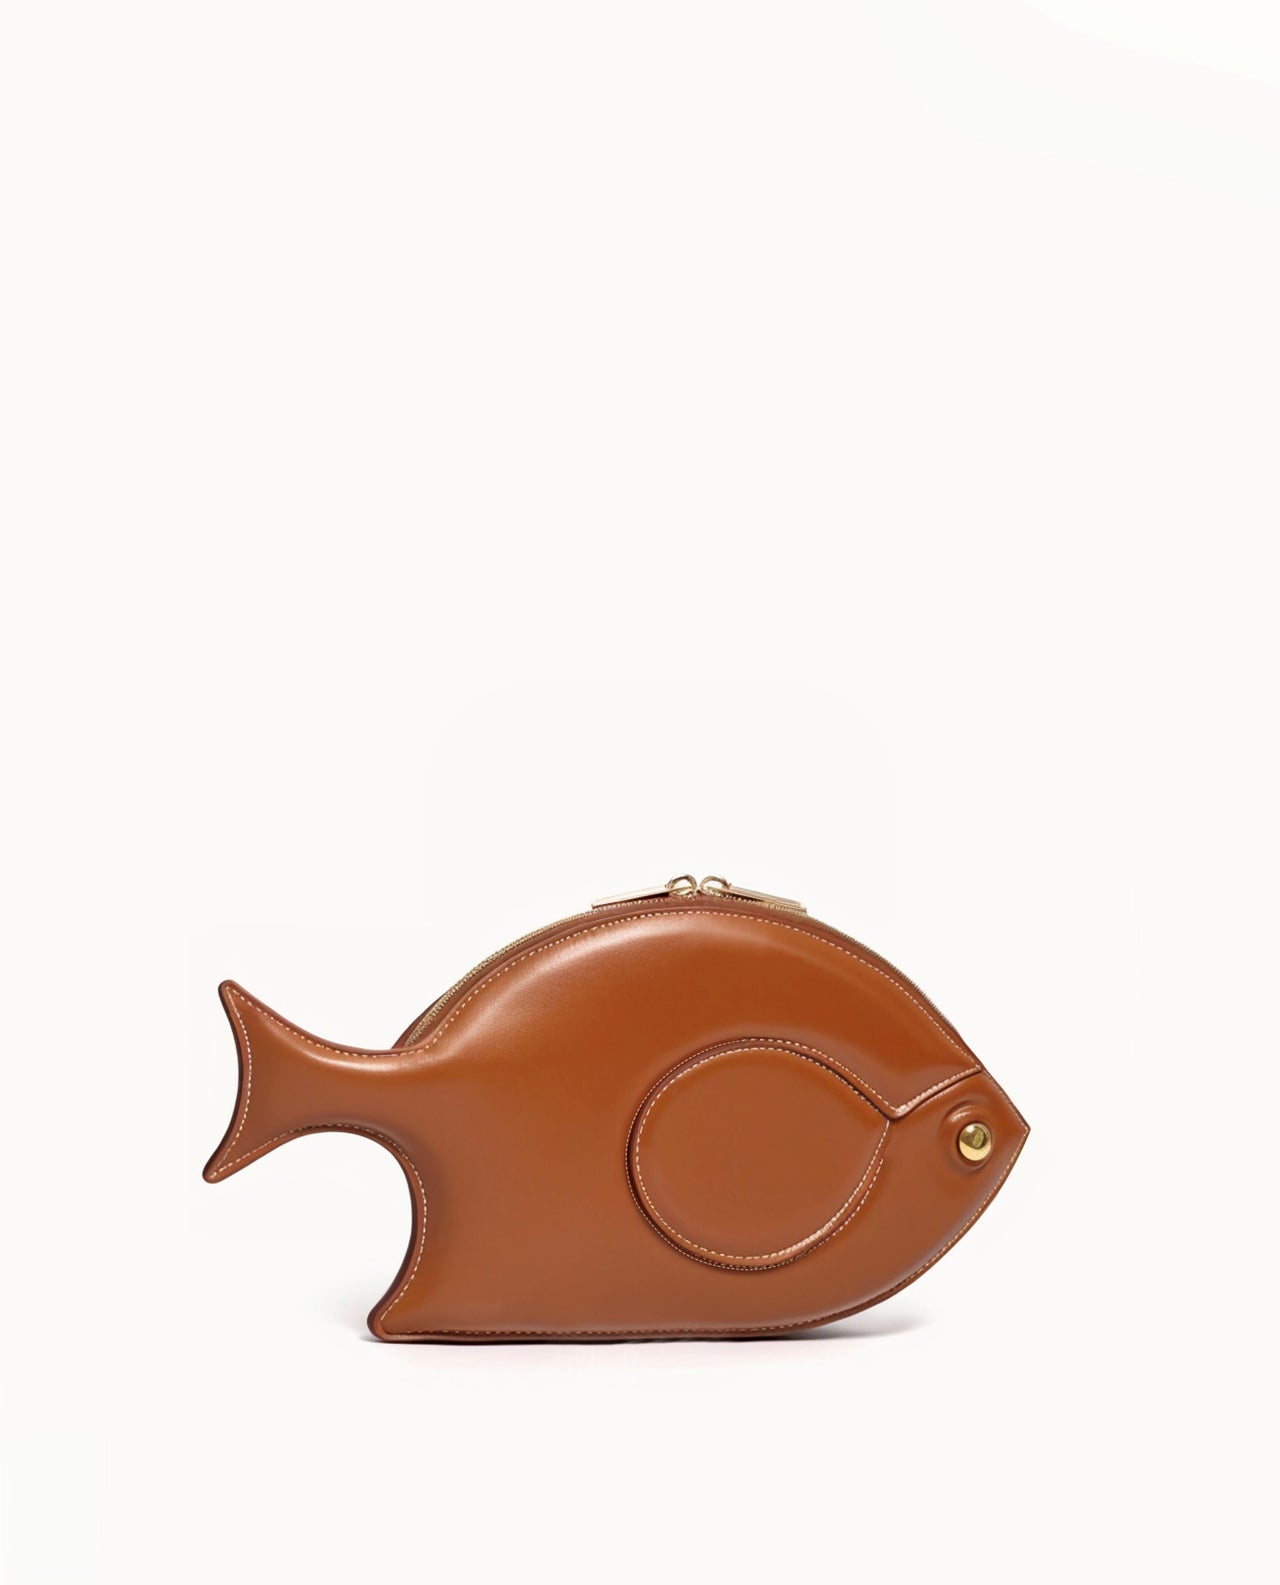 Brown fish shape clutch